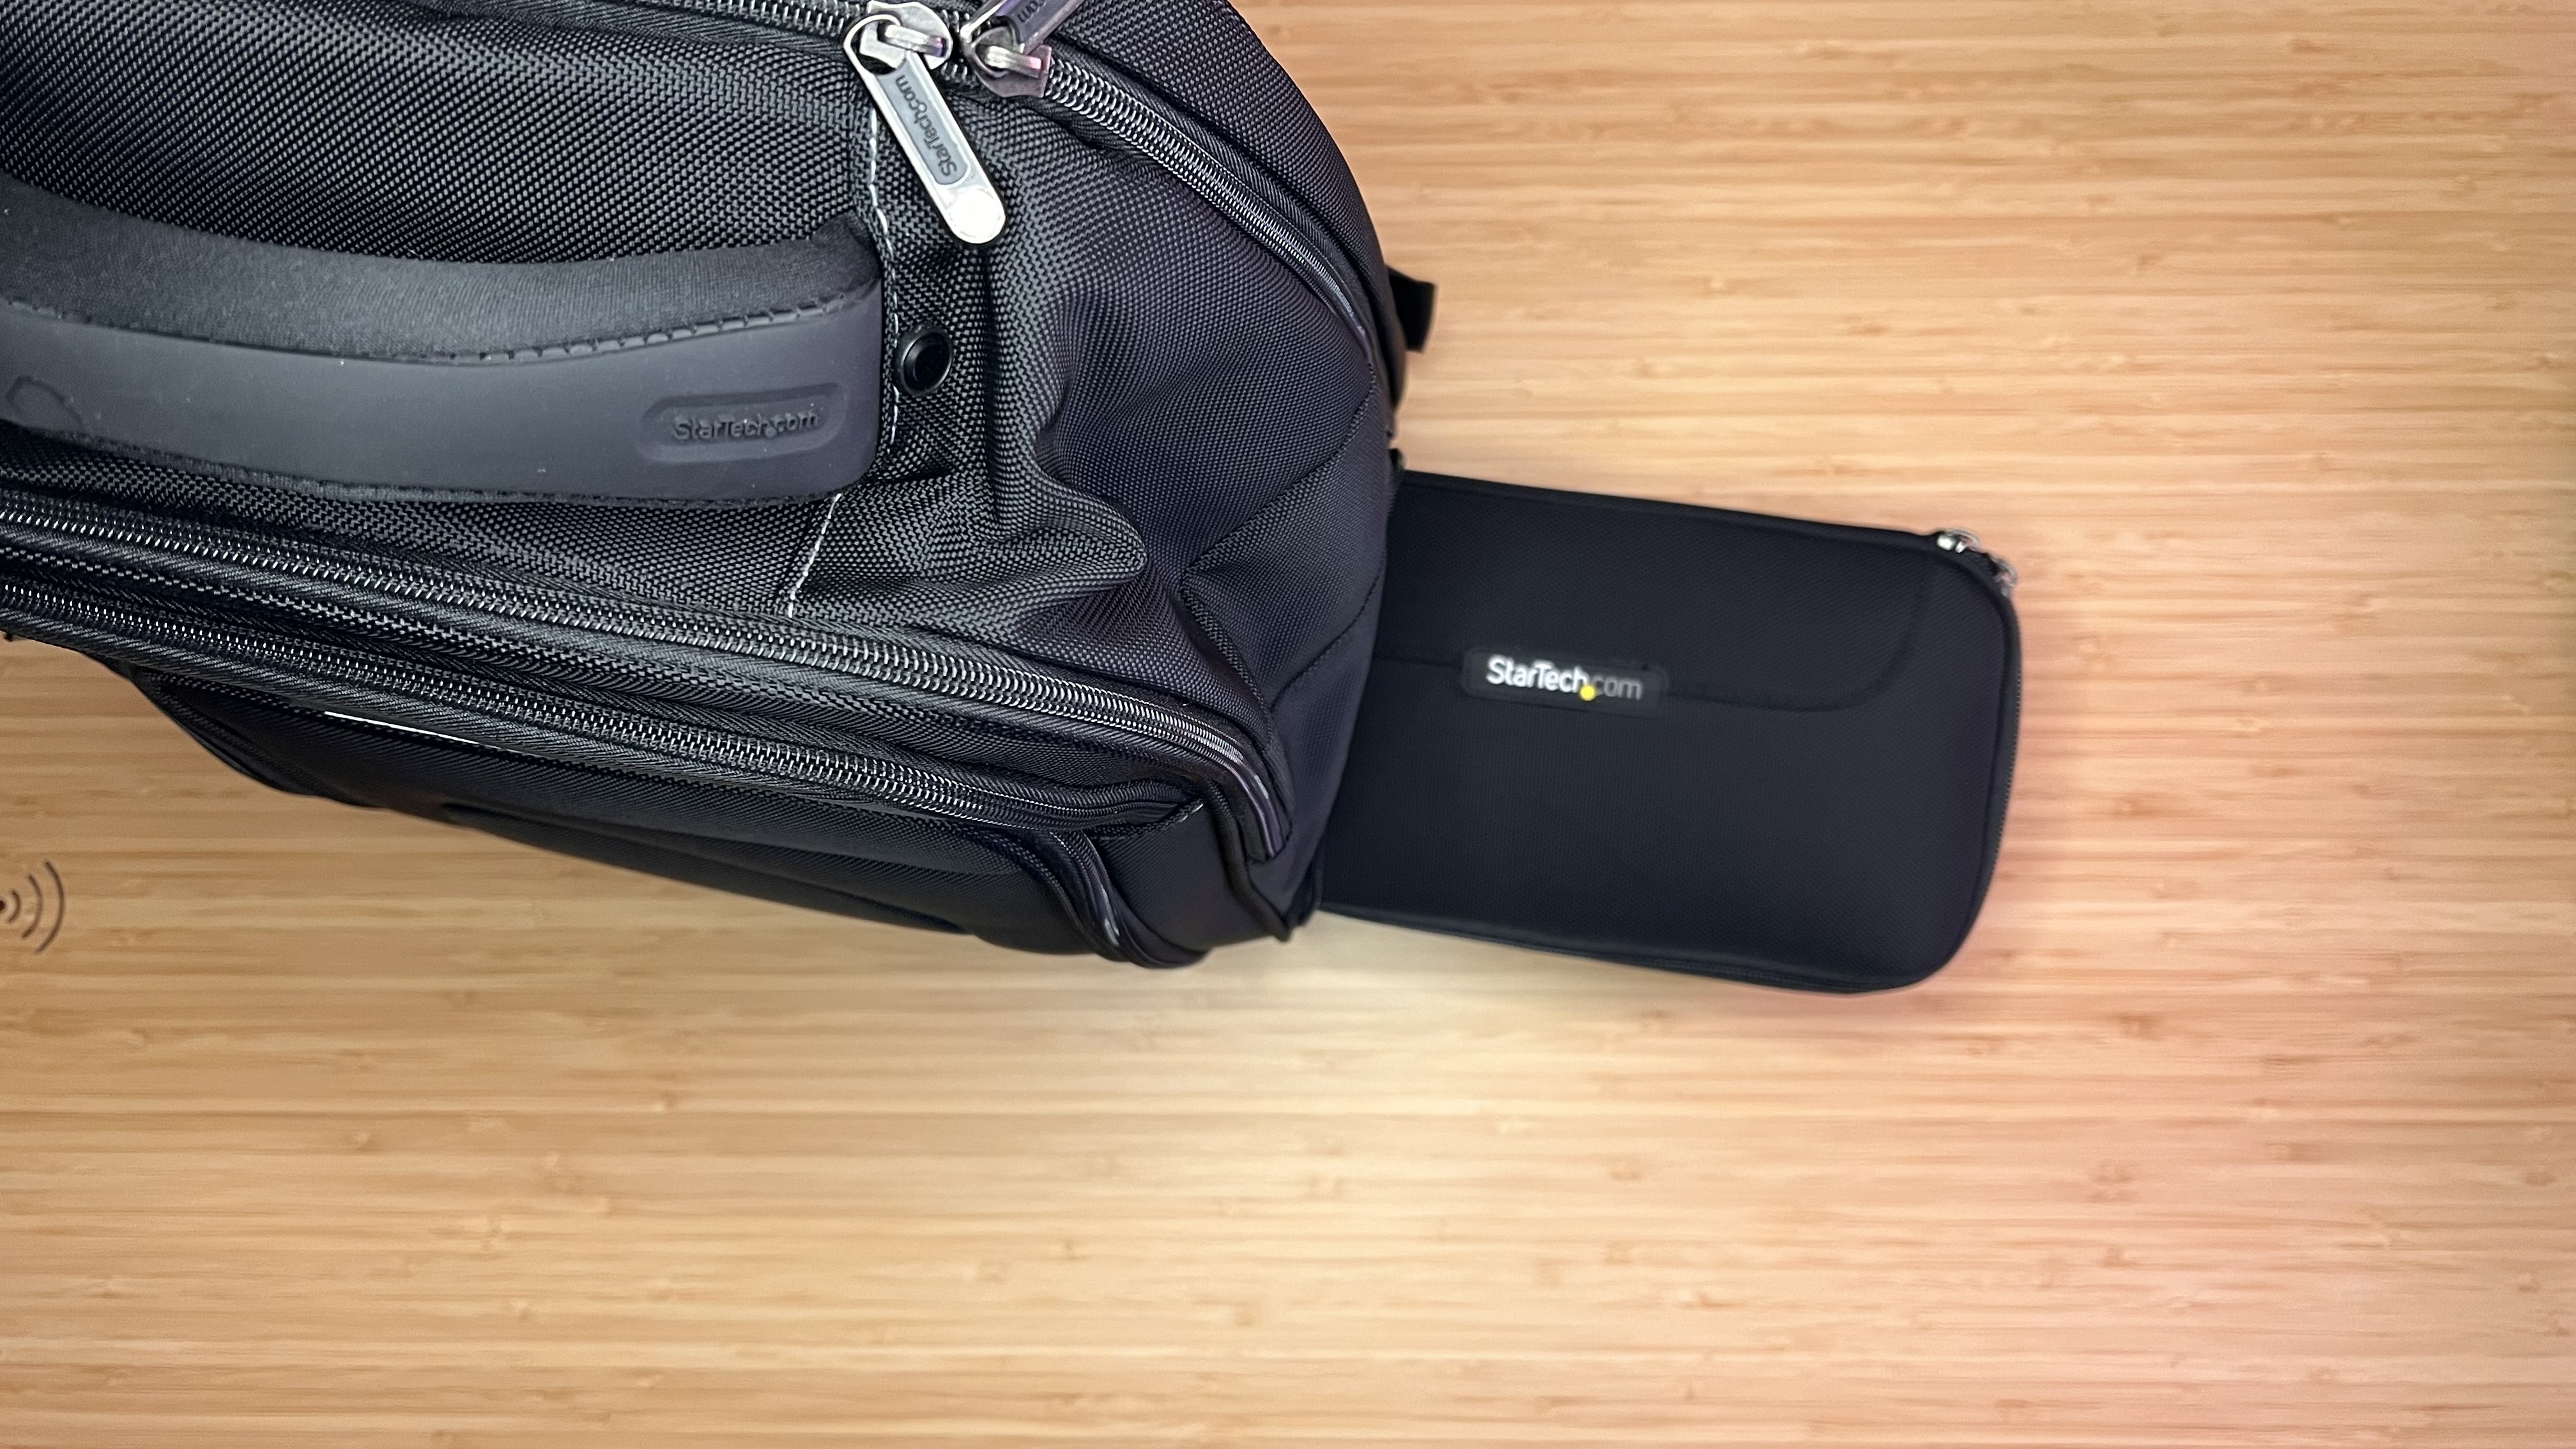 StarTech Laptop Bag Accessories Case